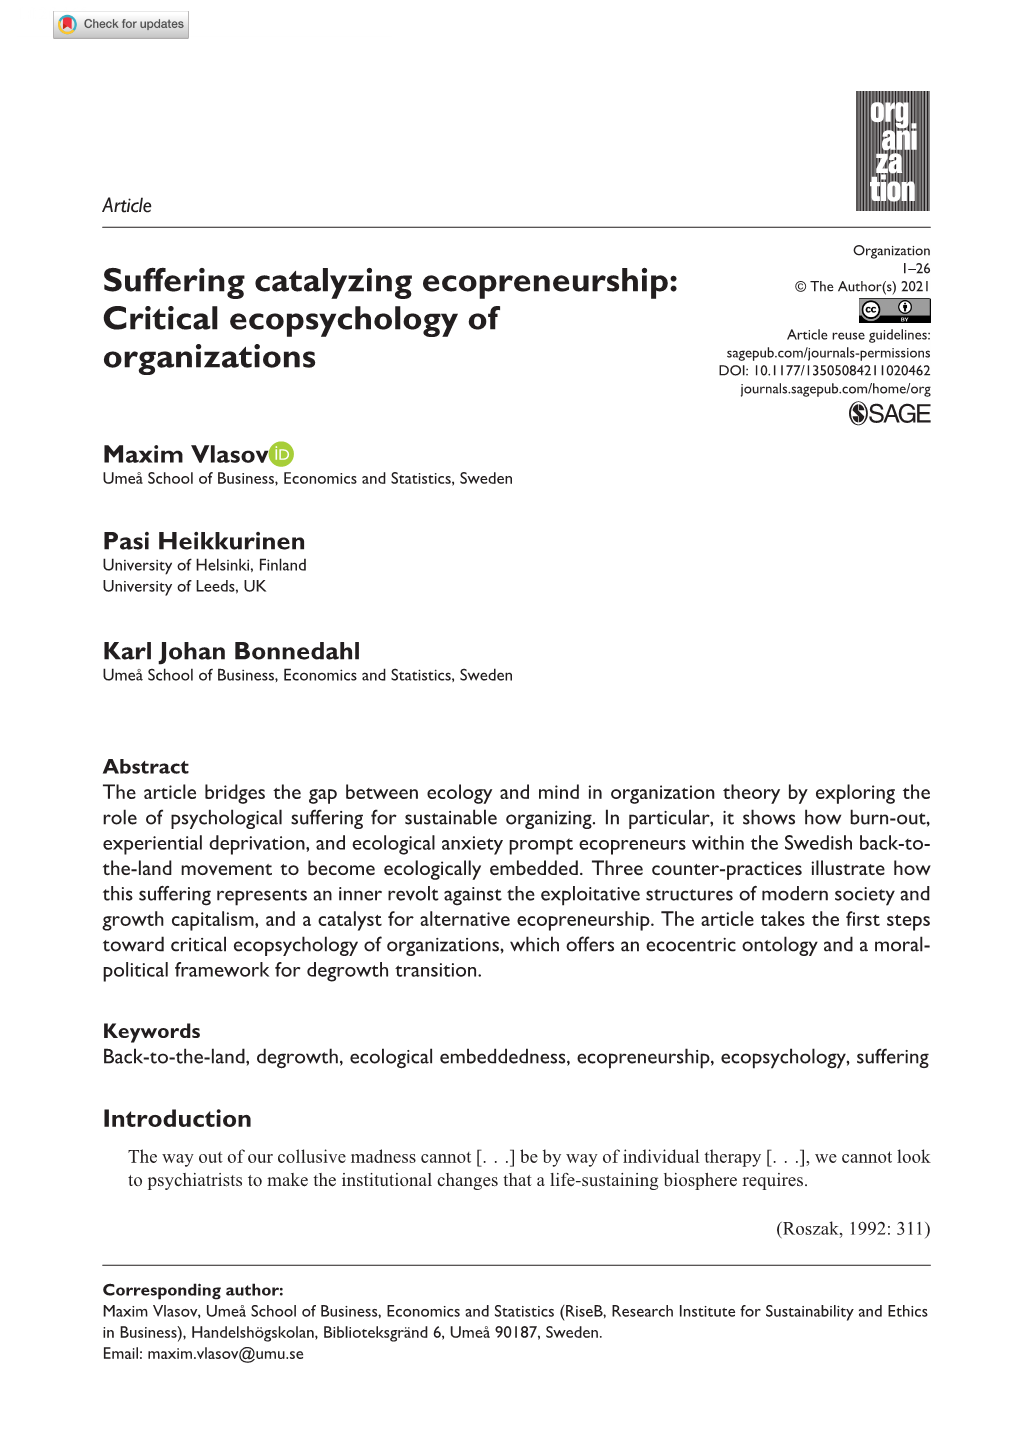 Suffering Catalyzing Ecopreneurship: Critical